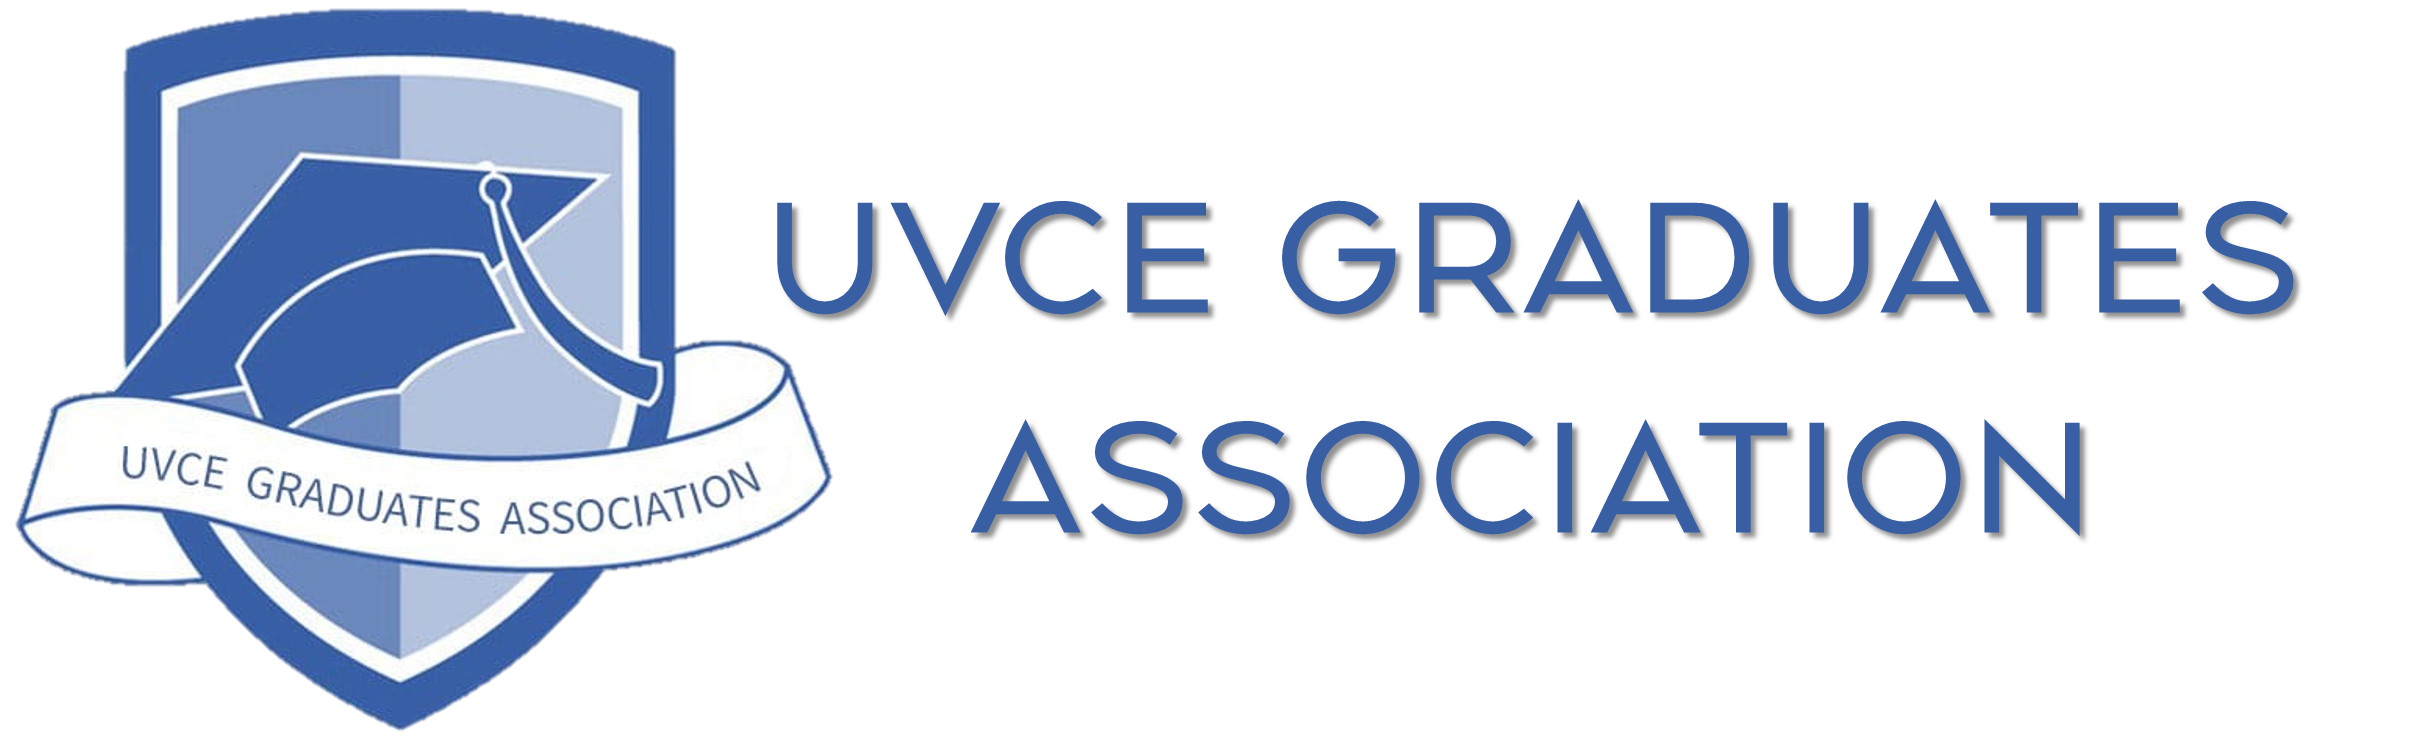 UVCE Graduates Association